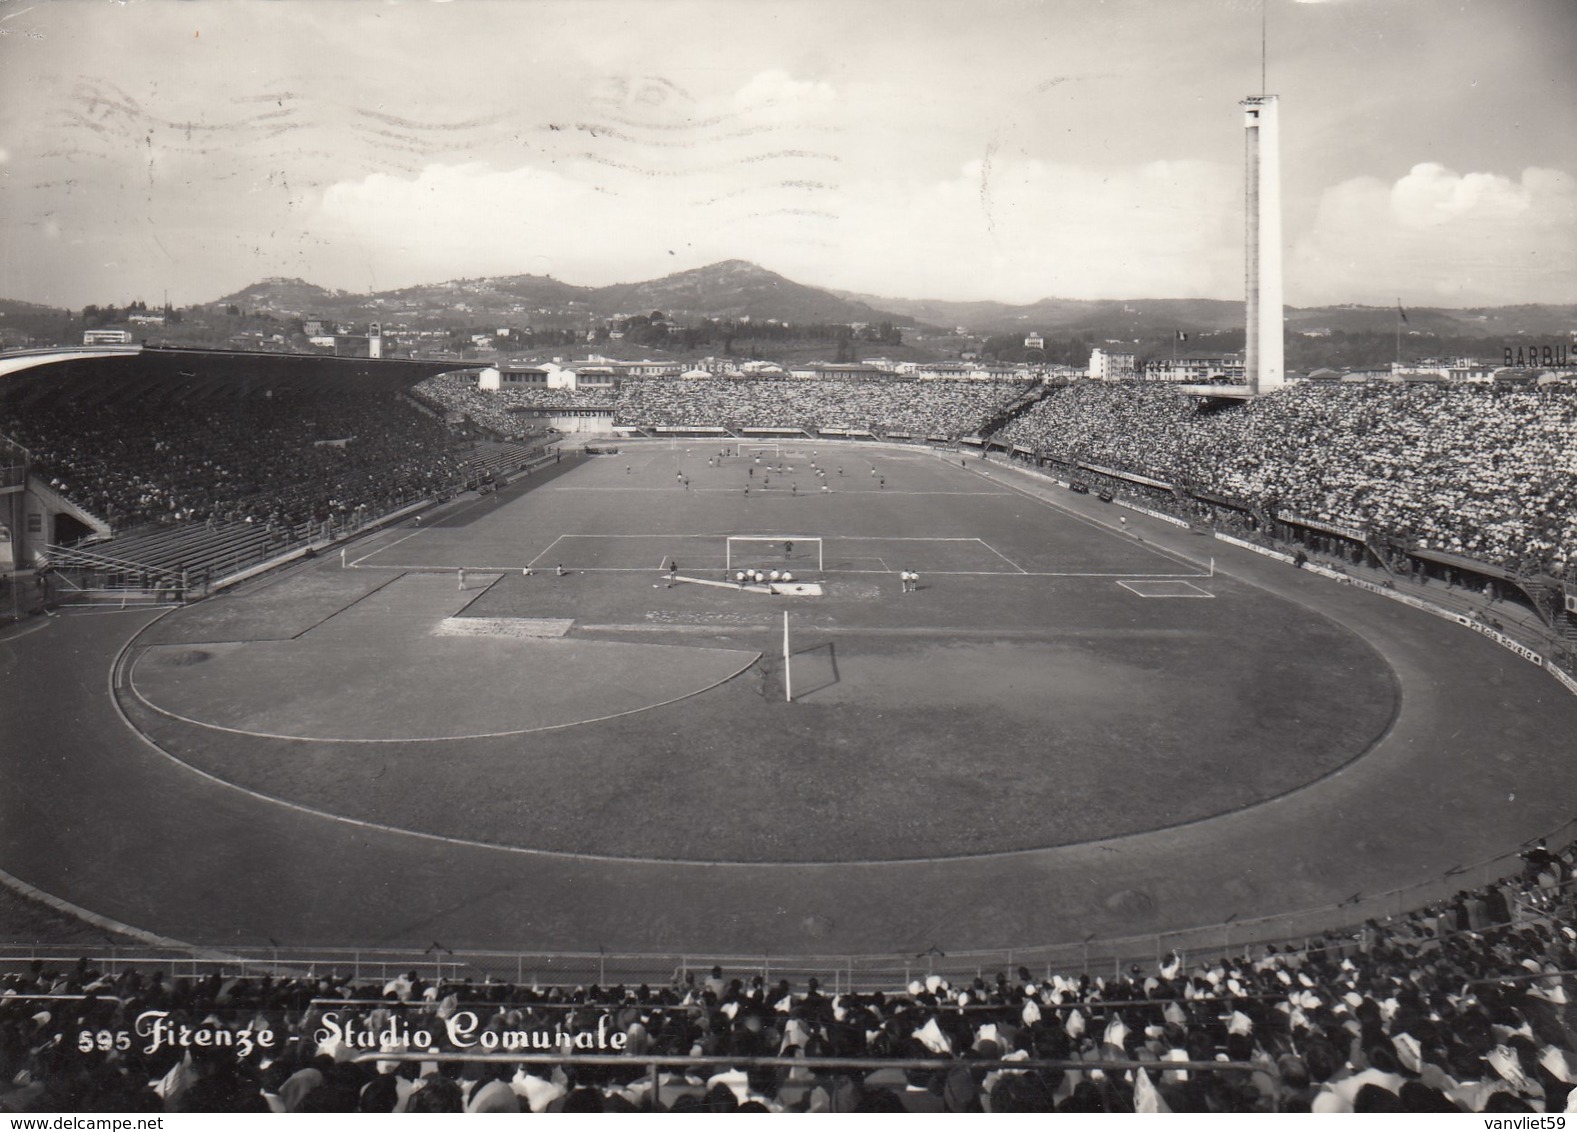 STADIO-STADE-STADIUM-ESTADIO-SOCCER-FOOTBALL-CAMPO SPORTIVO-FIRENZE-ITALY- VIAGGIATA ILO 11-4-1959 - Calcio